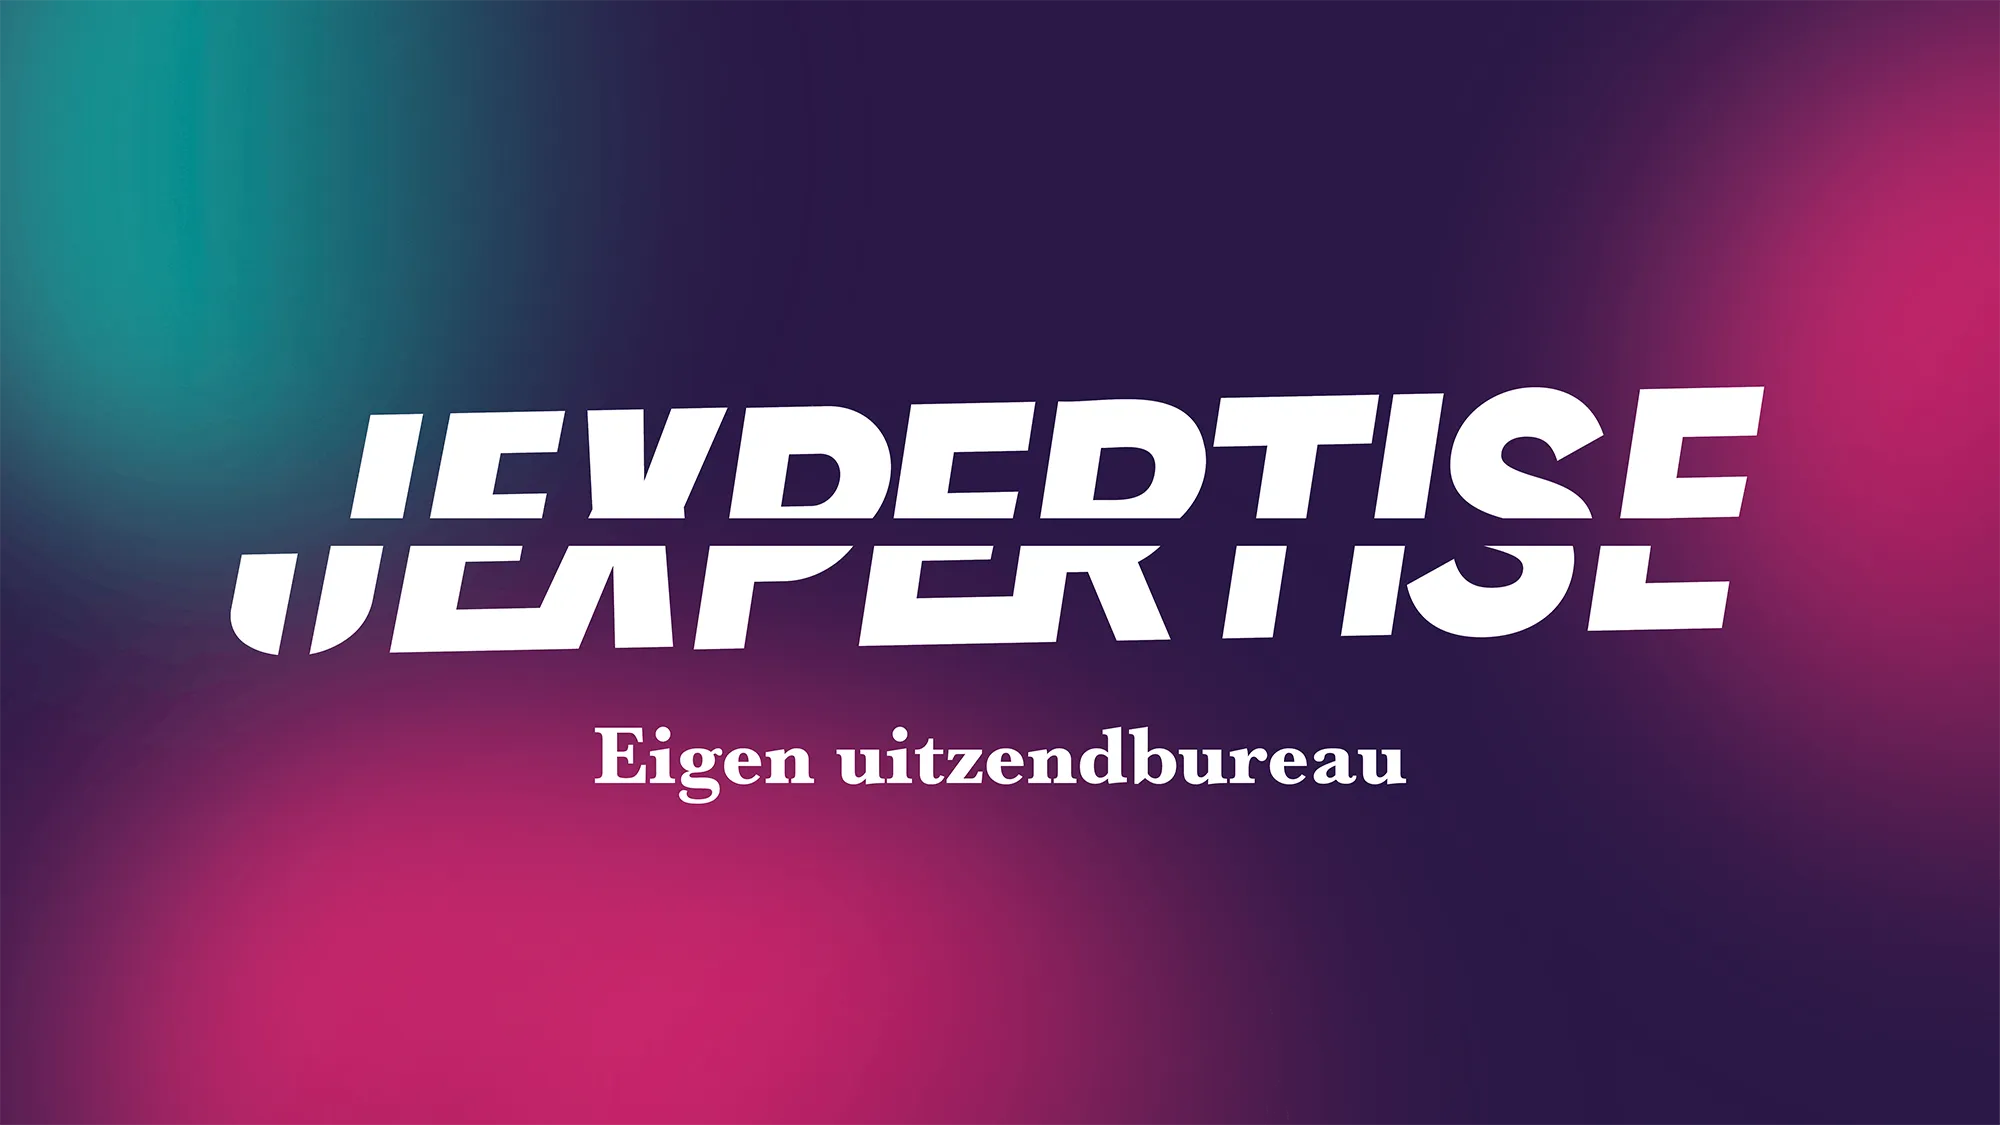 Jexpertise - eigen uitzendbureau banner